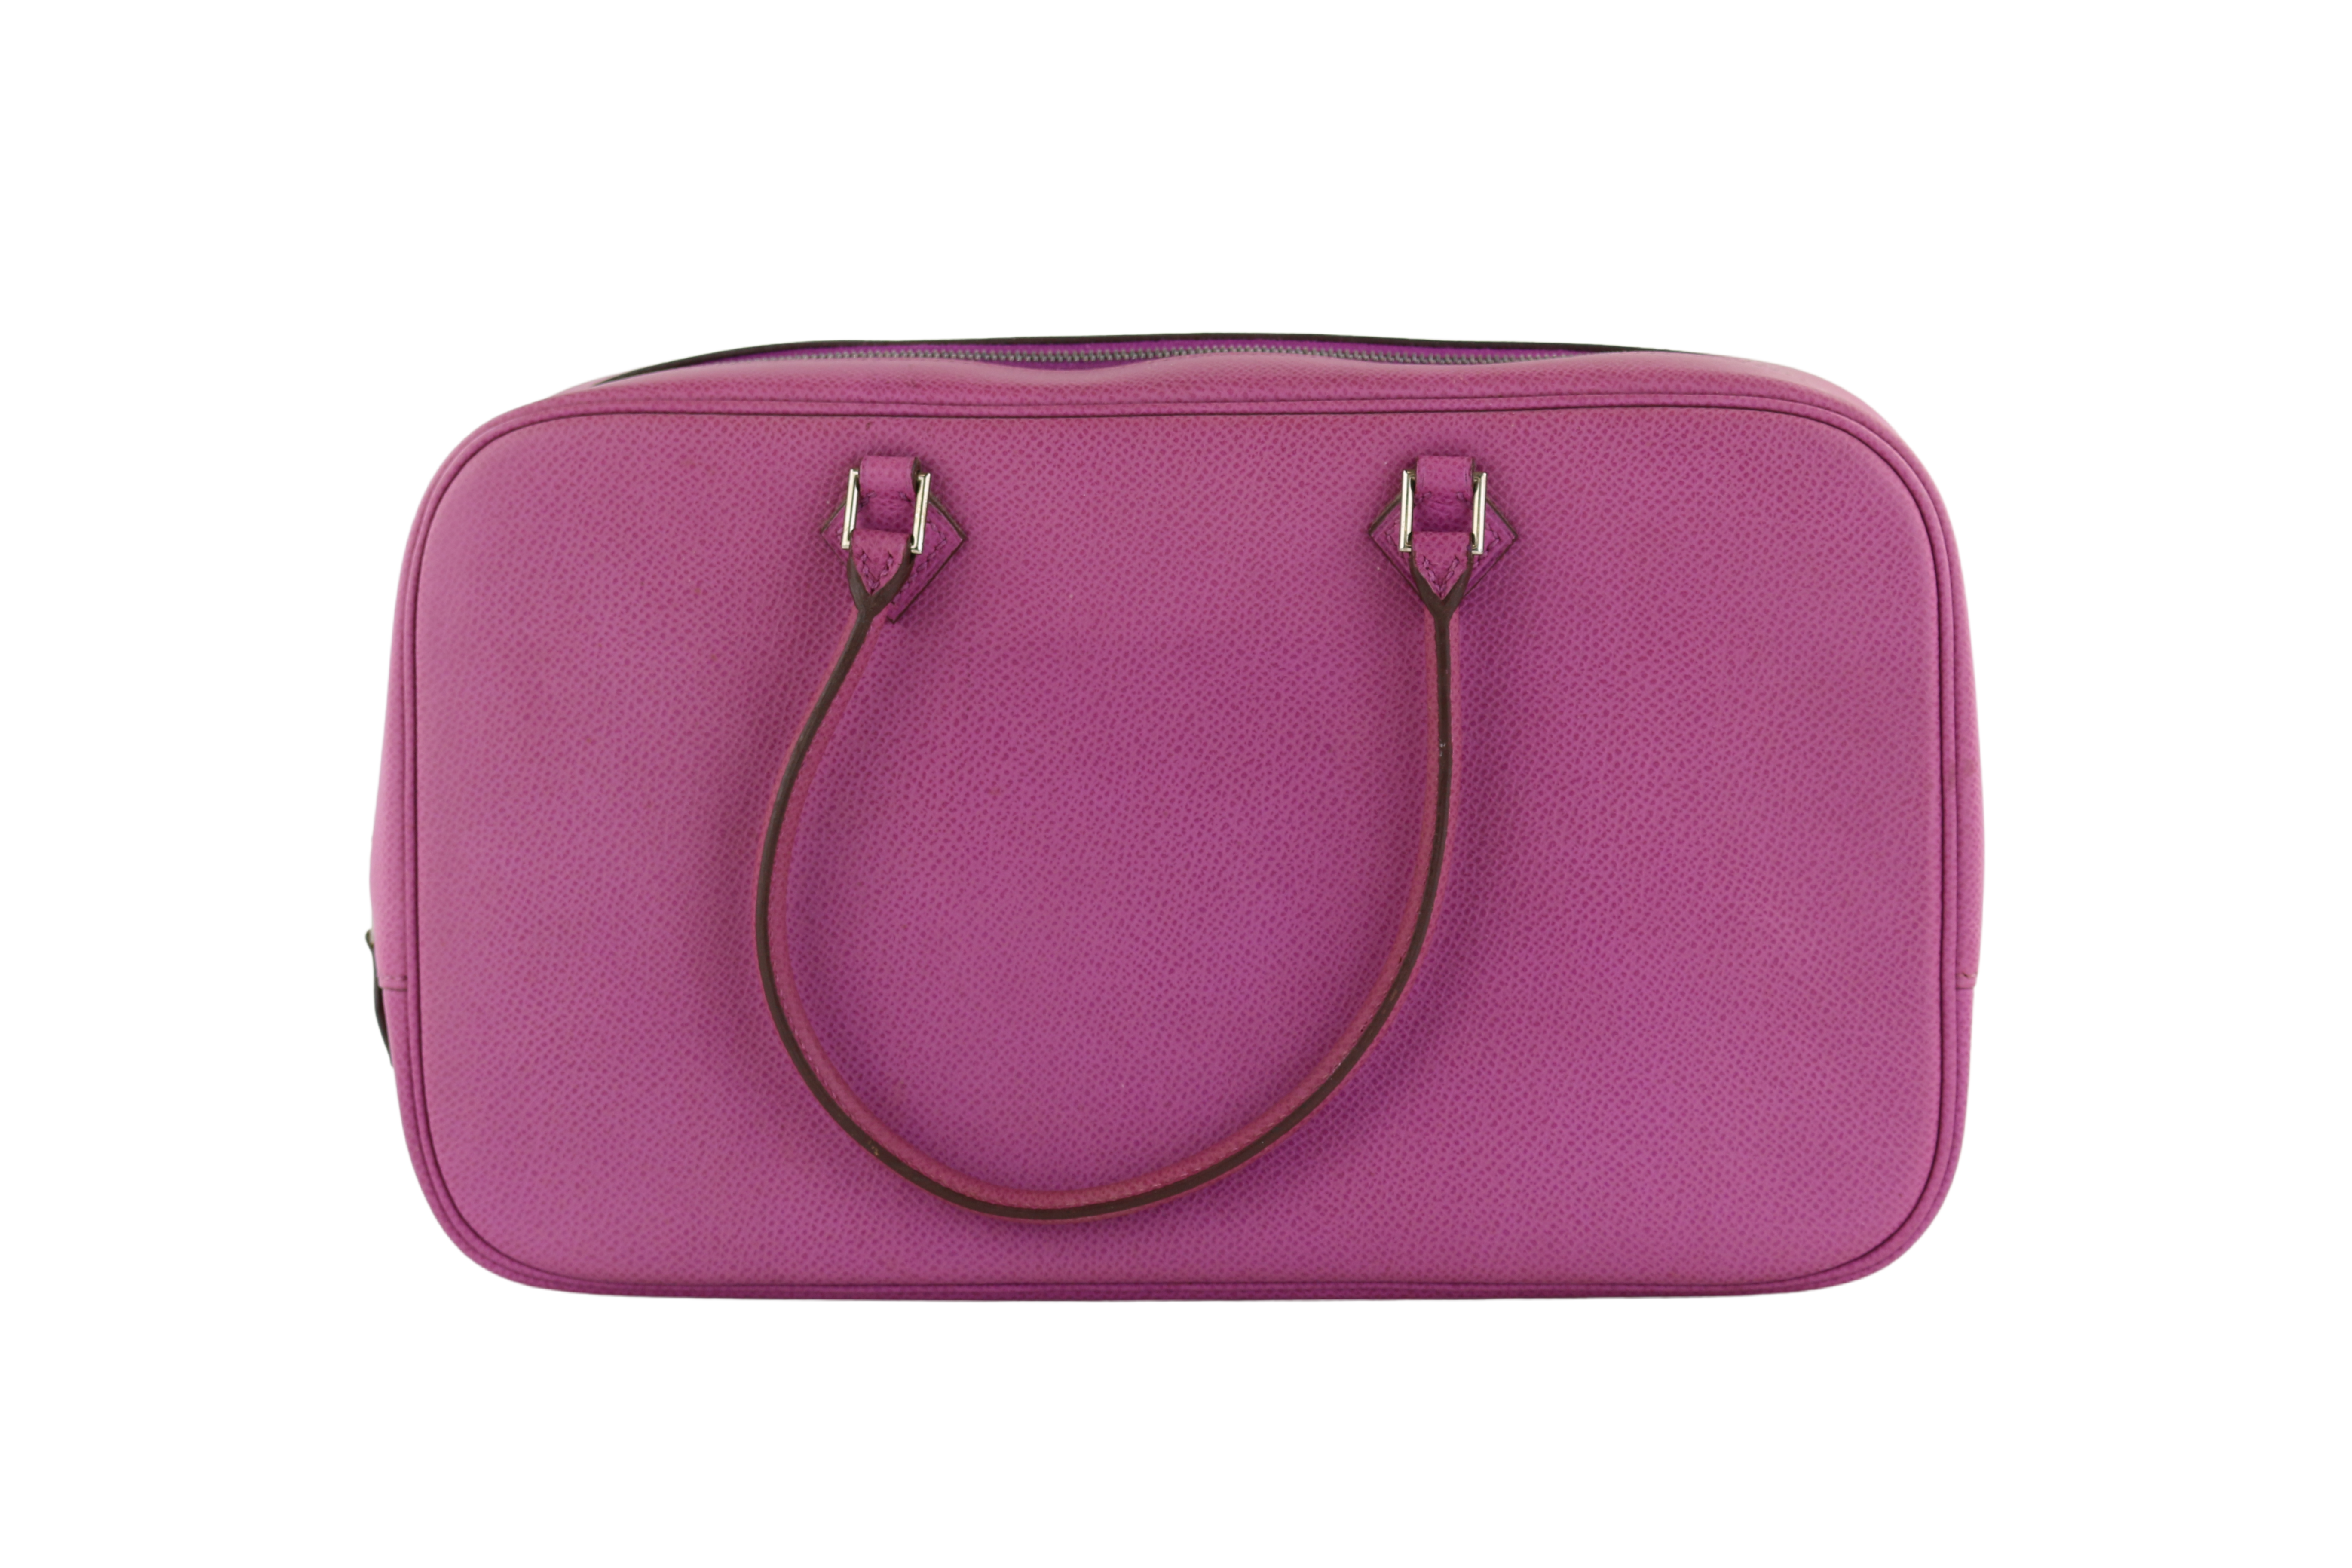 Opulent Habits - Luxury Preloved Handbags - NJ & Worldwide